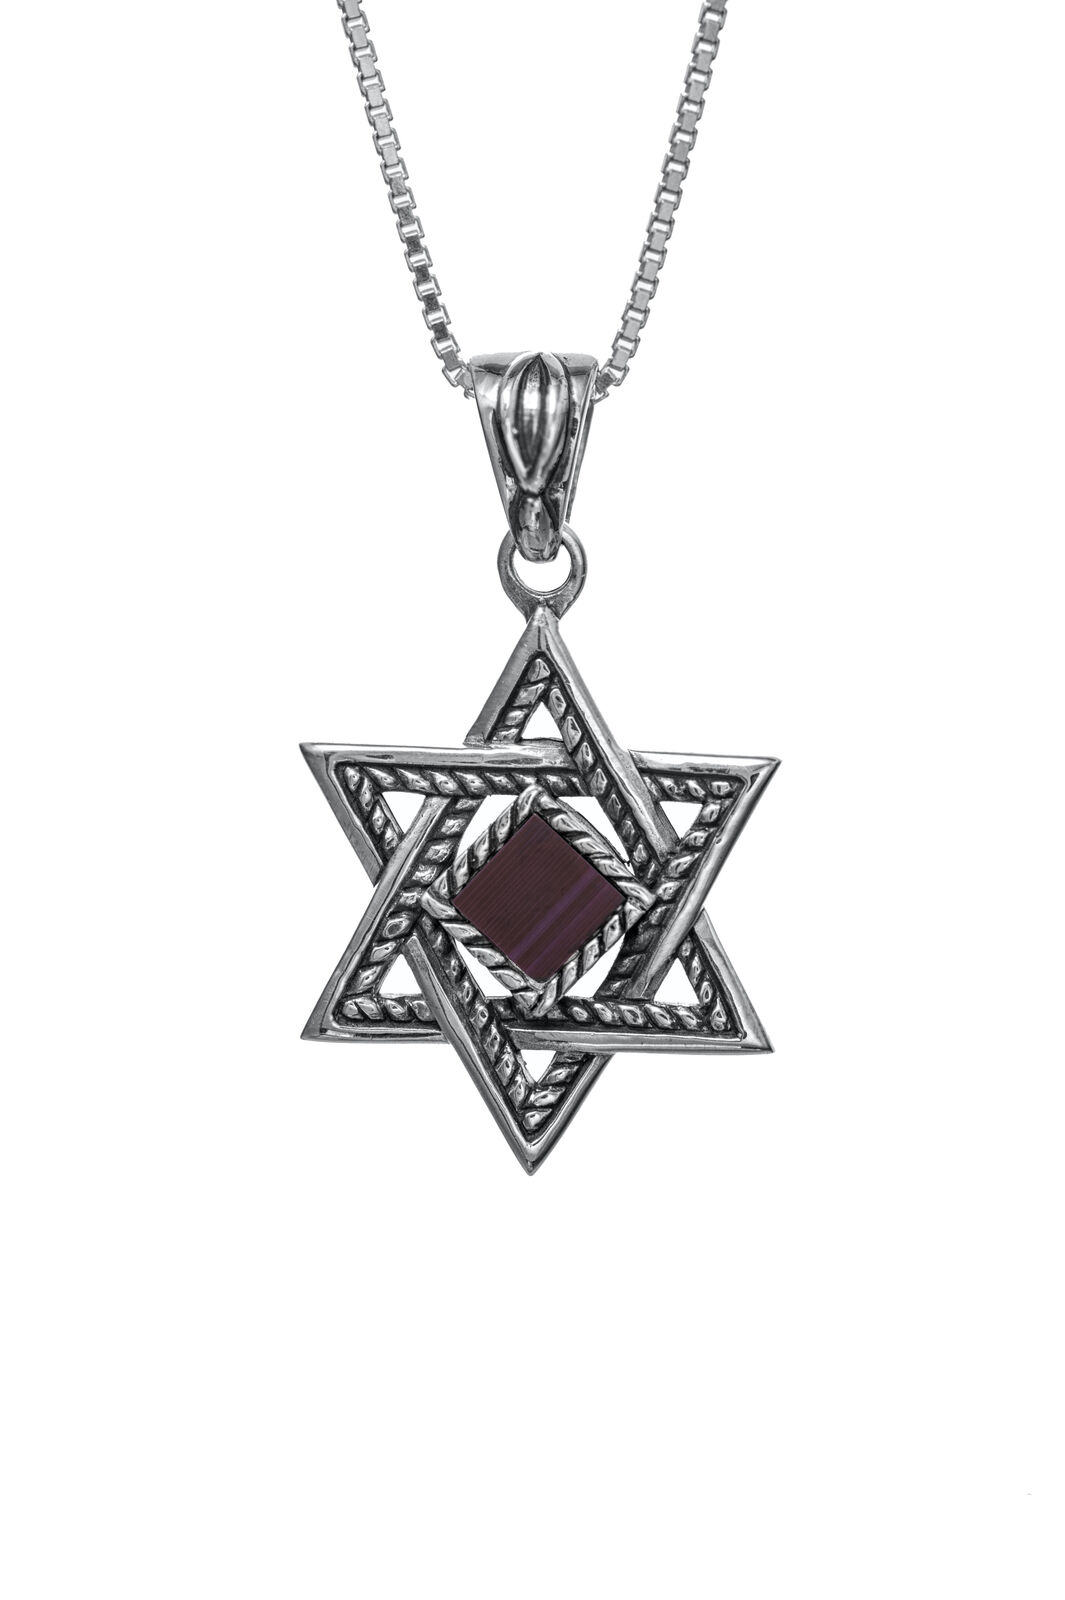 Magen David with Jerusalem Nano Bible Torah Pendant Necklace Silver 925 Gift